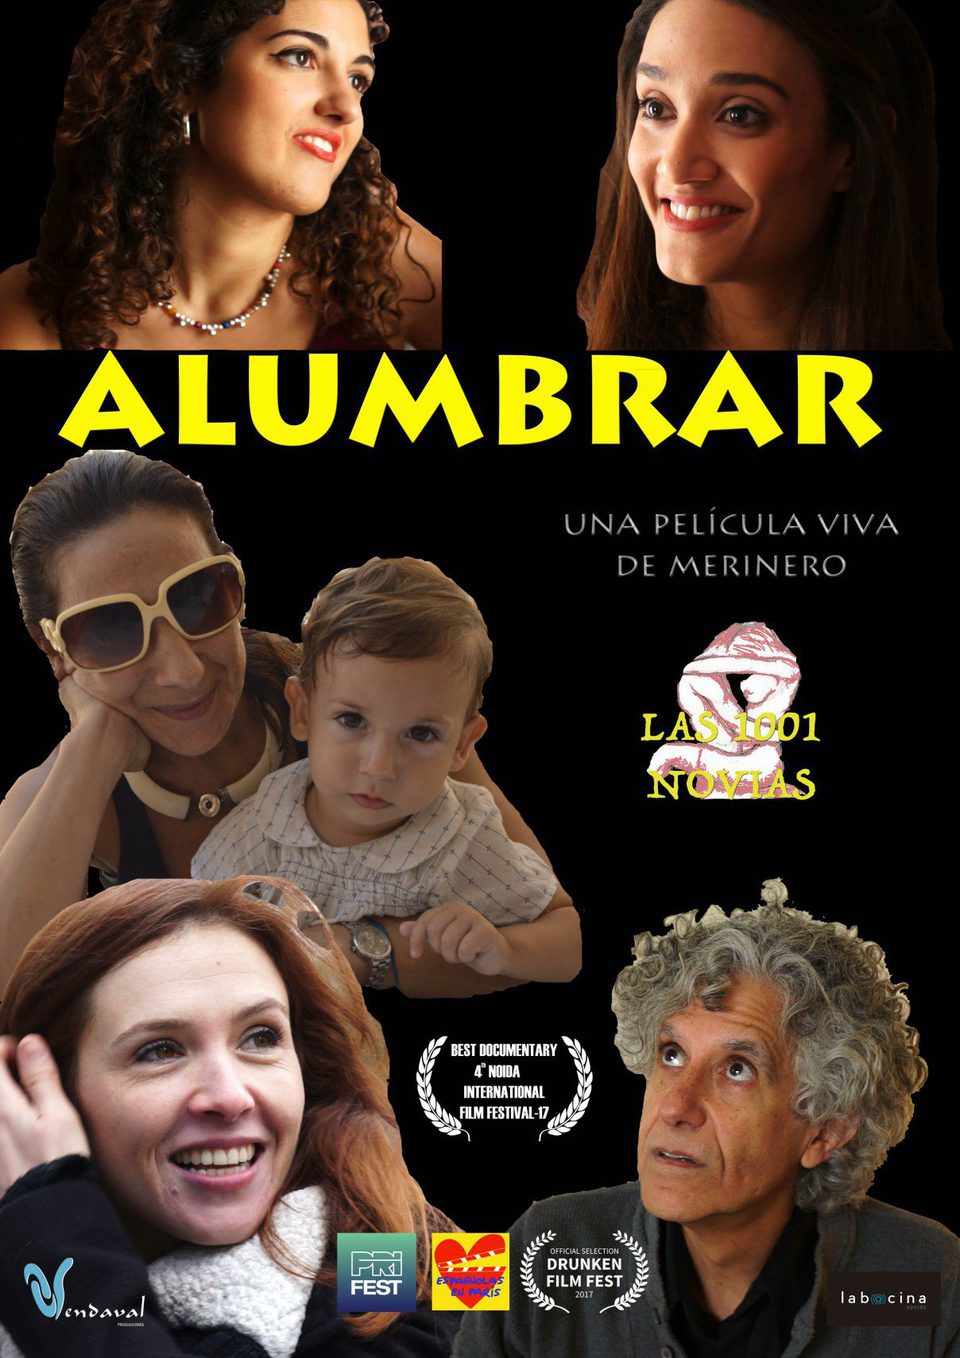 Poster of Alumbrar : Las 1001 novias - Póster 'Alumbrar: Las 1001 novias'